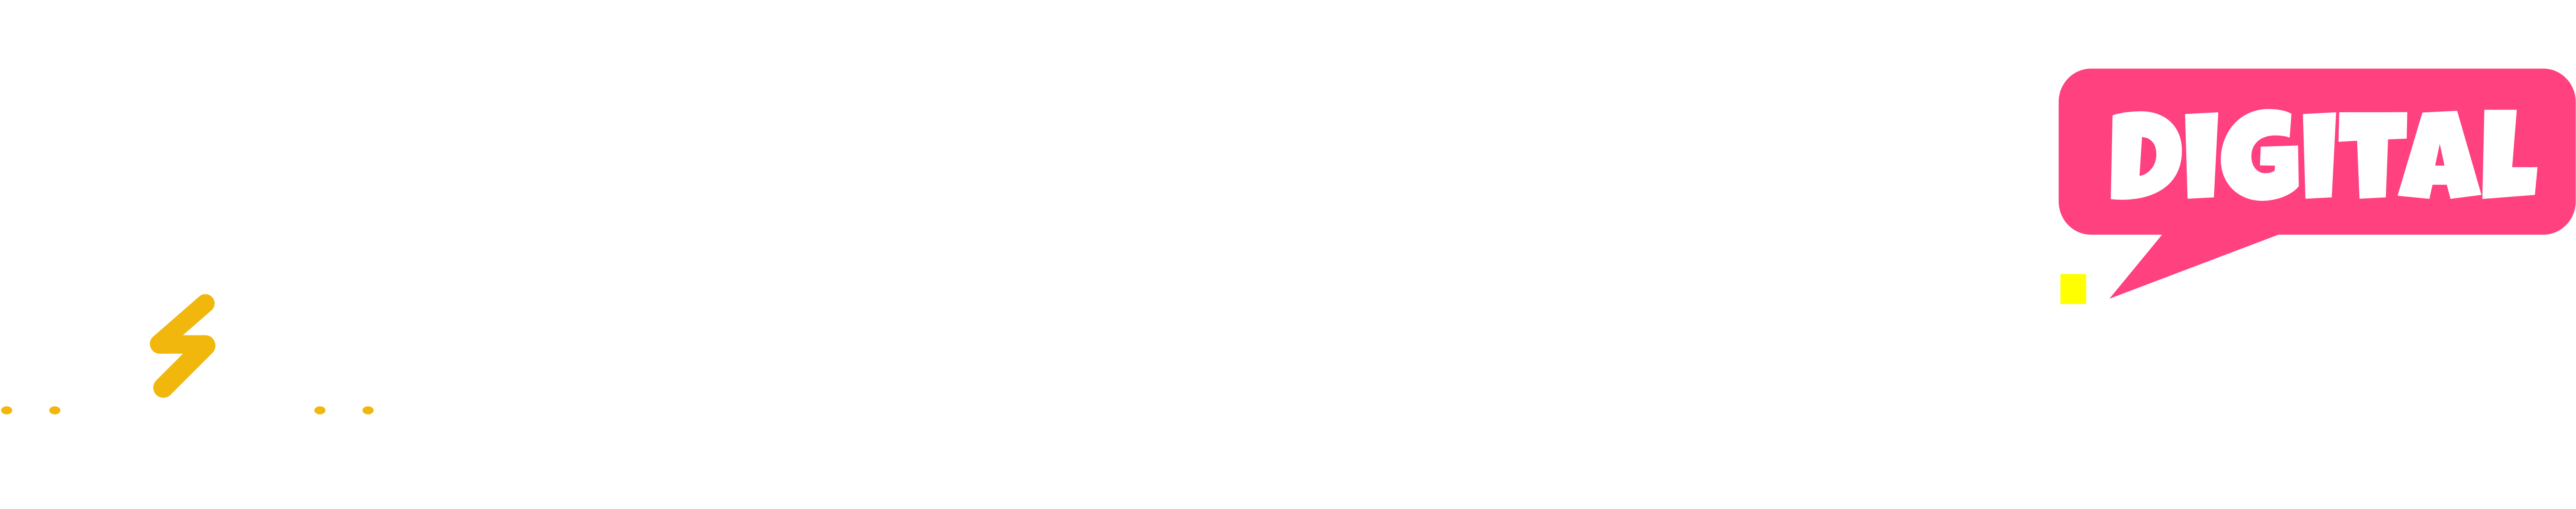 ServerClub Digital Services